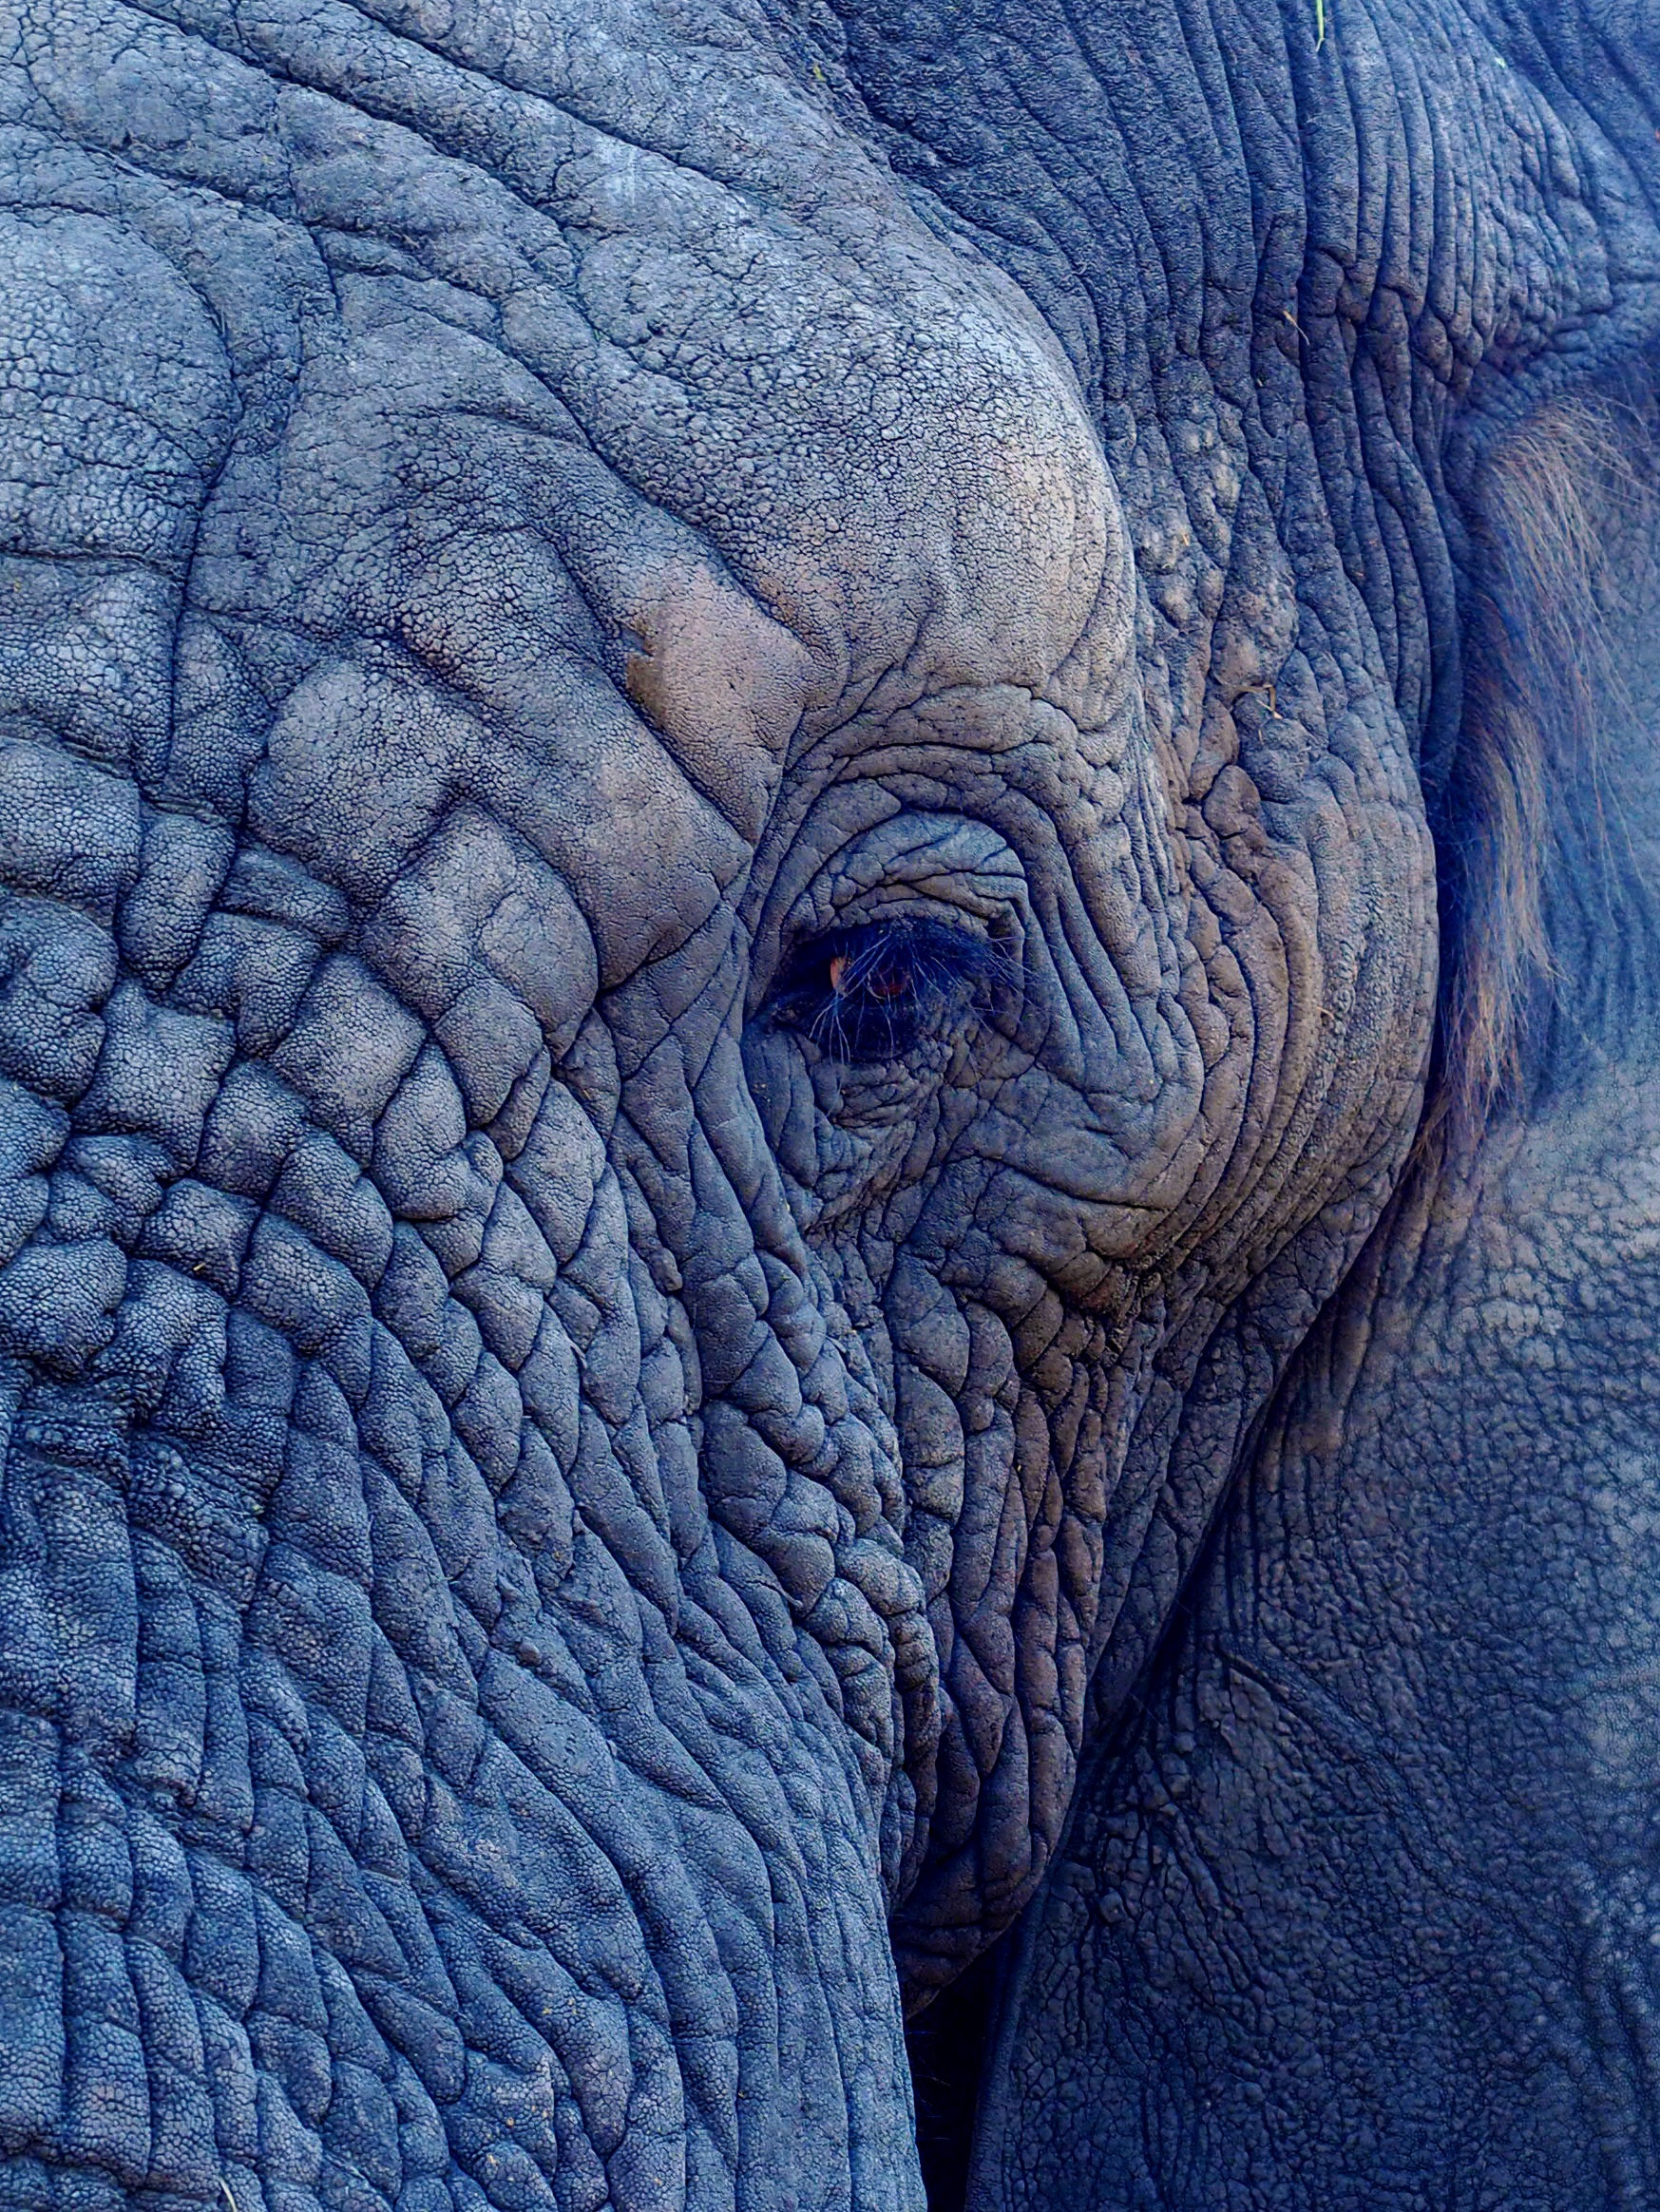 elephant, animals, folds, pleating, eye 32K